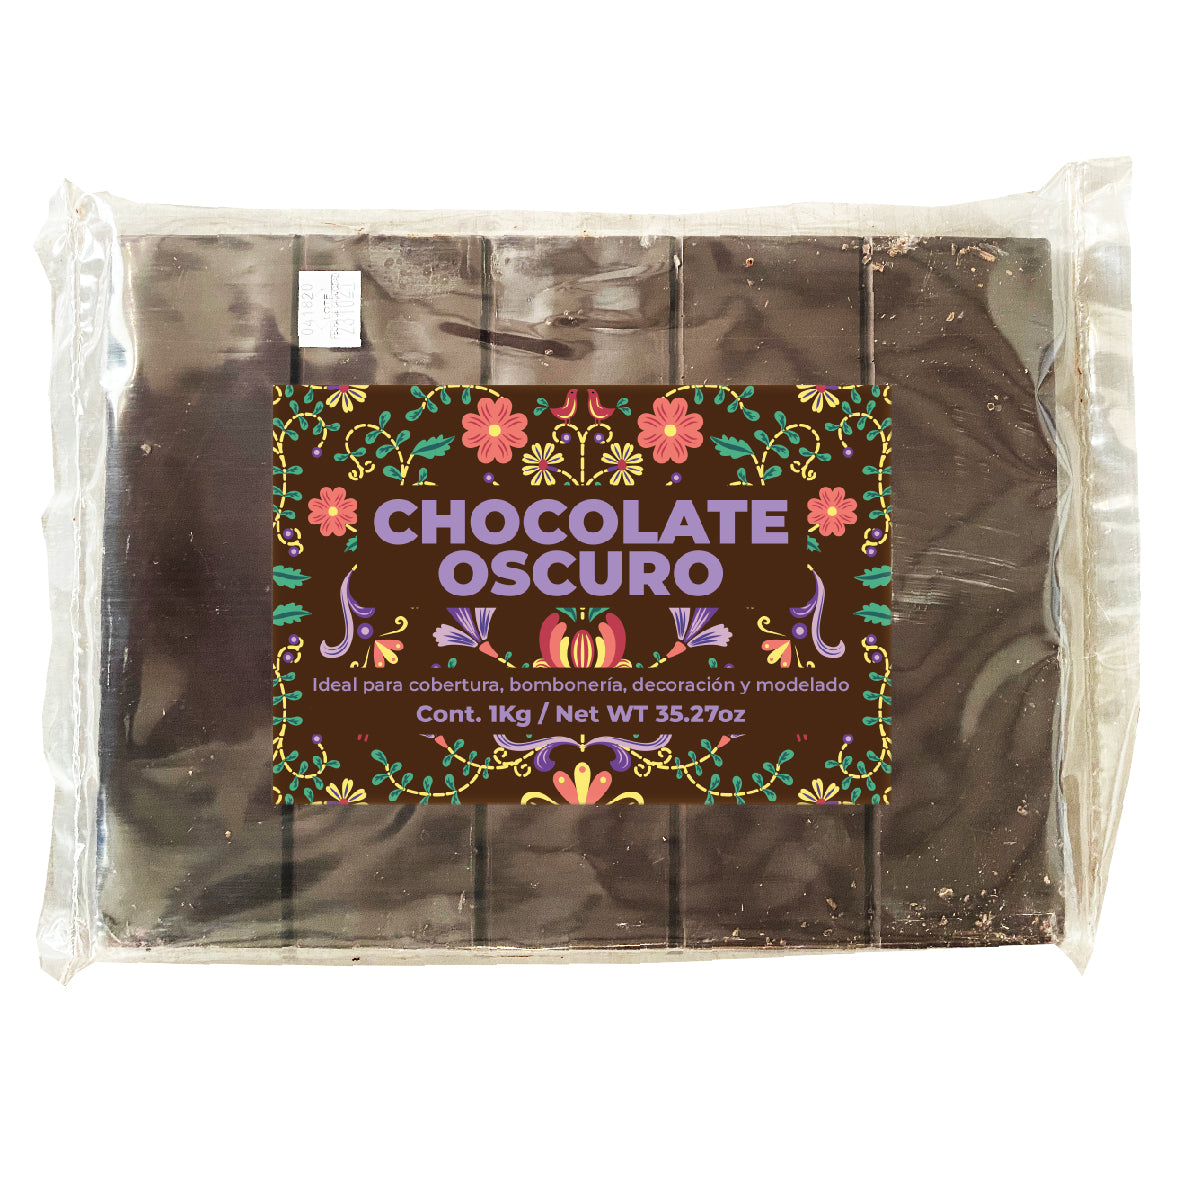 Tablilla Chocolate Oscuro 1kg - Lé Fortune Store